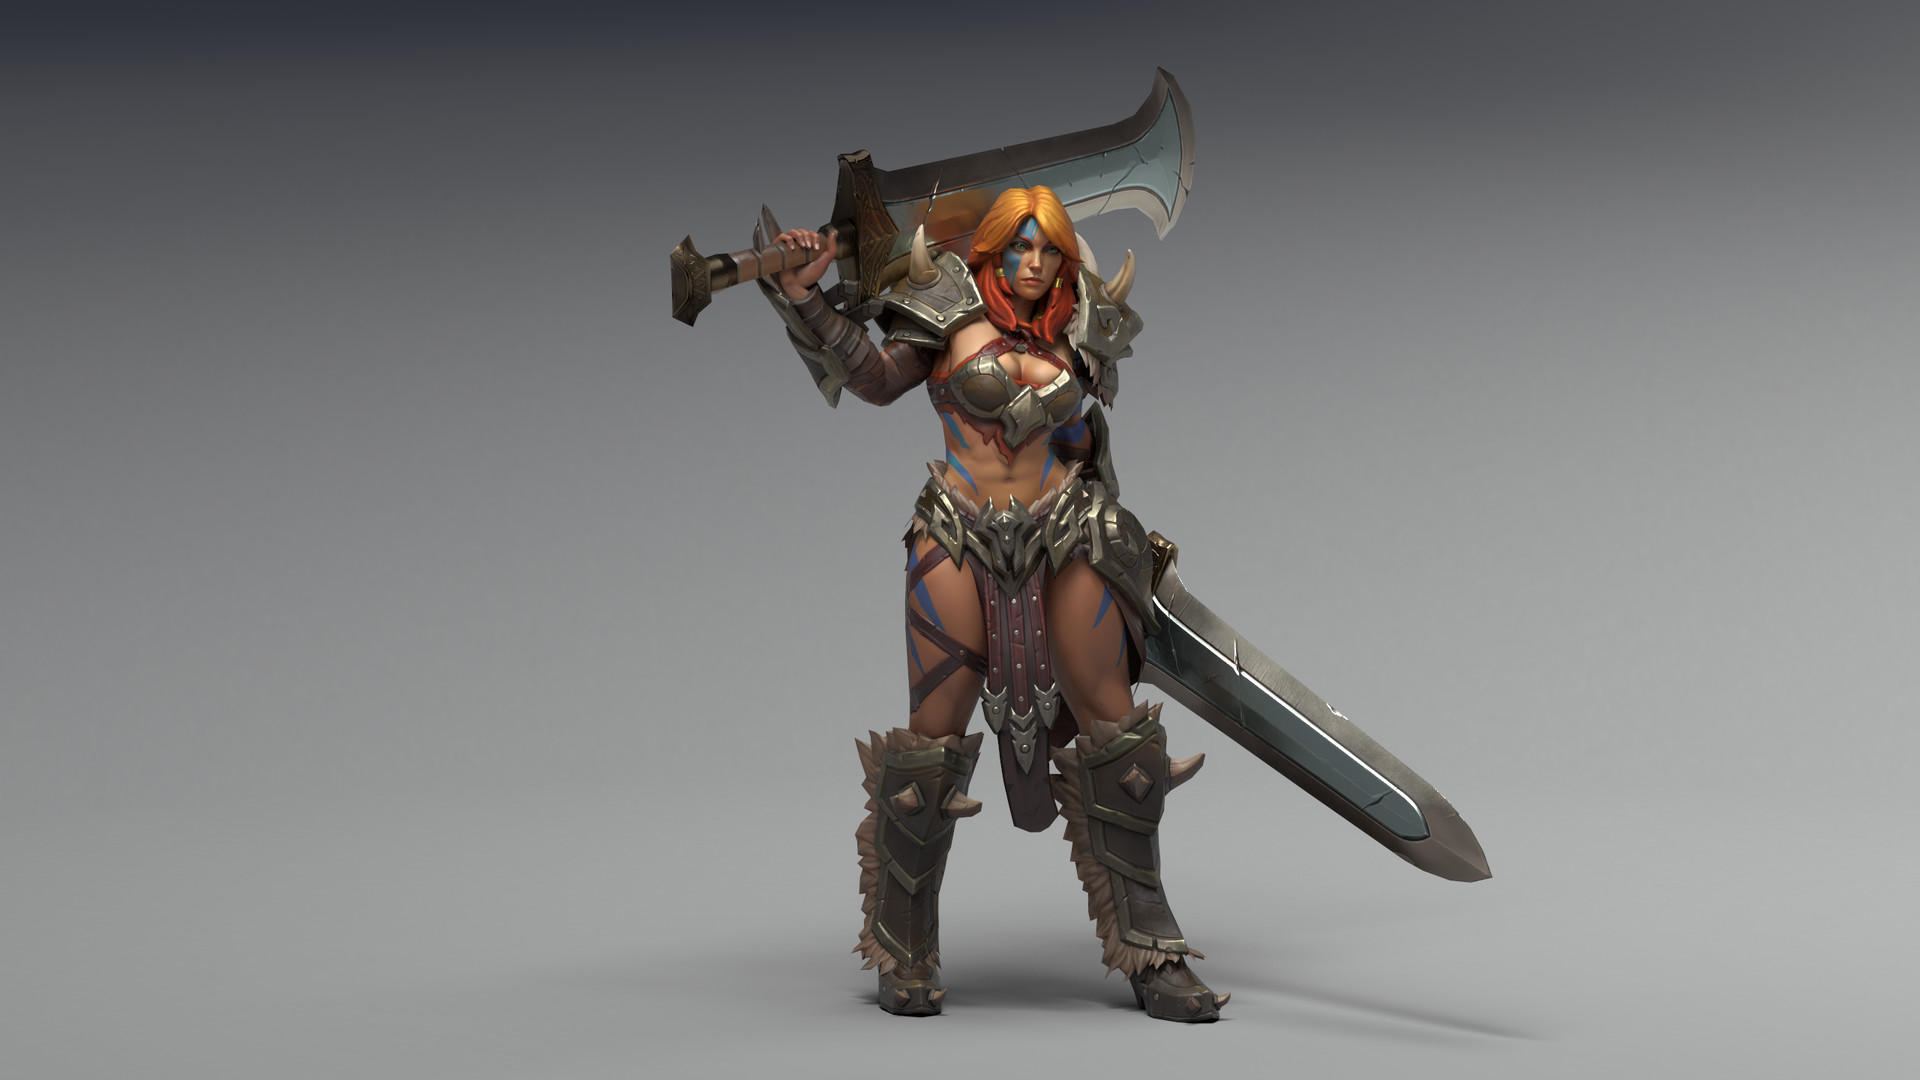 General 1920x1080 barbarian sword armor Diablo 3: Reaper of Souls Diablo III tattoo gray background long hair redhead women green eyes CGI video games fantasy girl female warrior